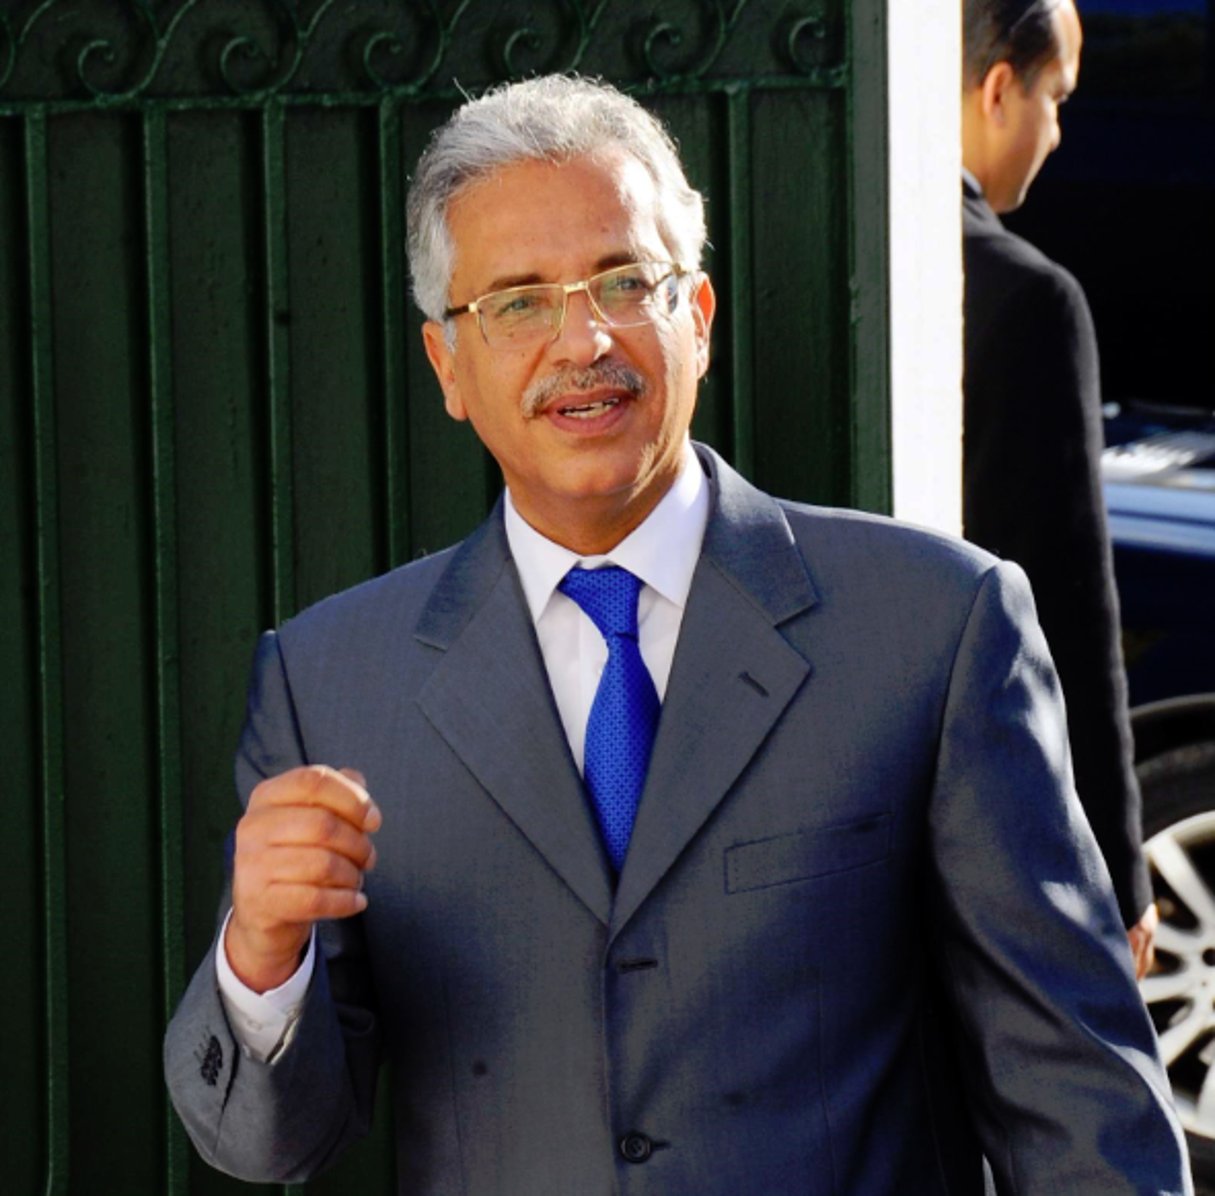 Omar Mansour, ministre de la Justice tunisien. © Hassene Dridi/AP/SIPA